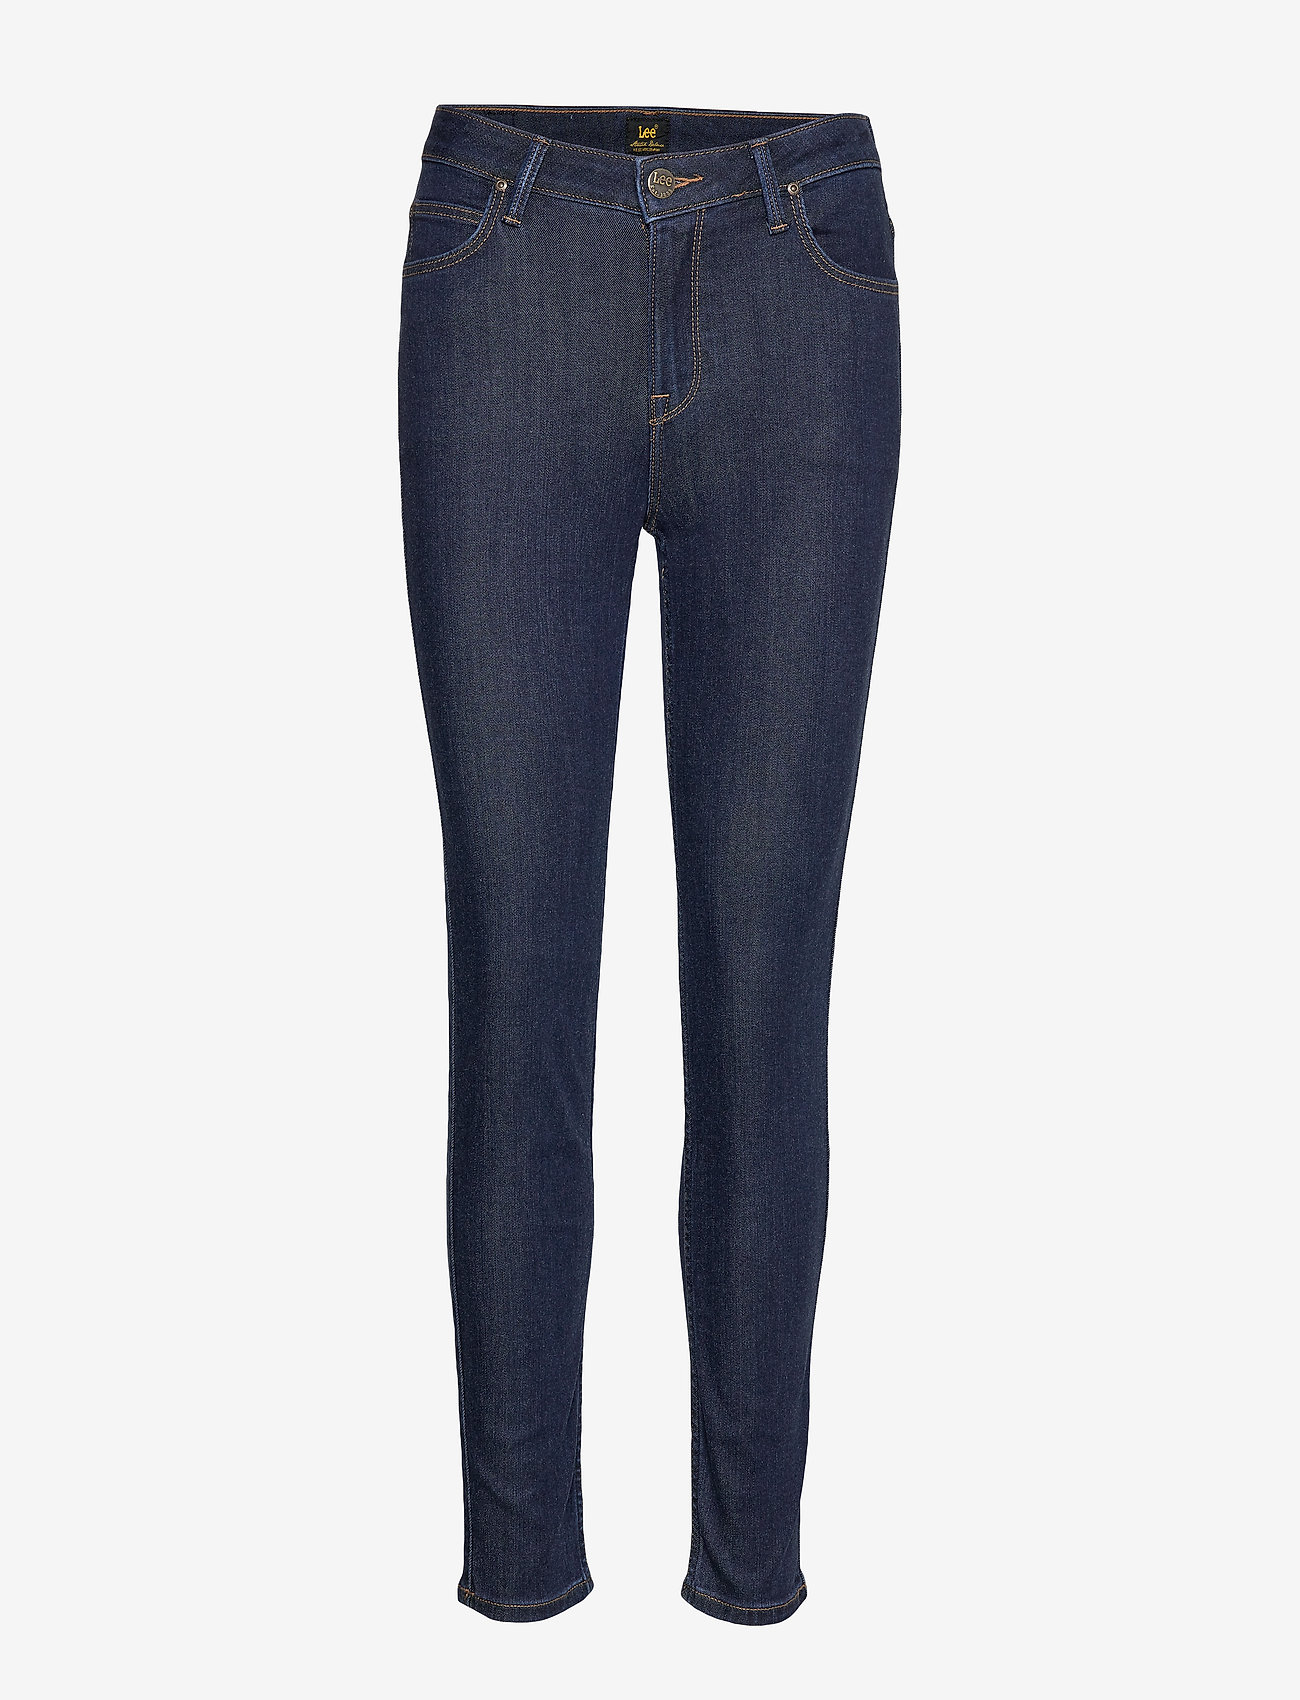 Lee Jeans - Scarlett High - skinny jeans - tonal stonewash - 0